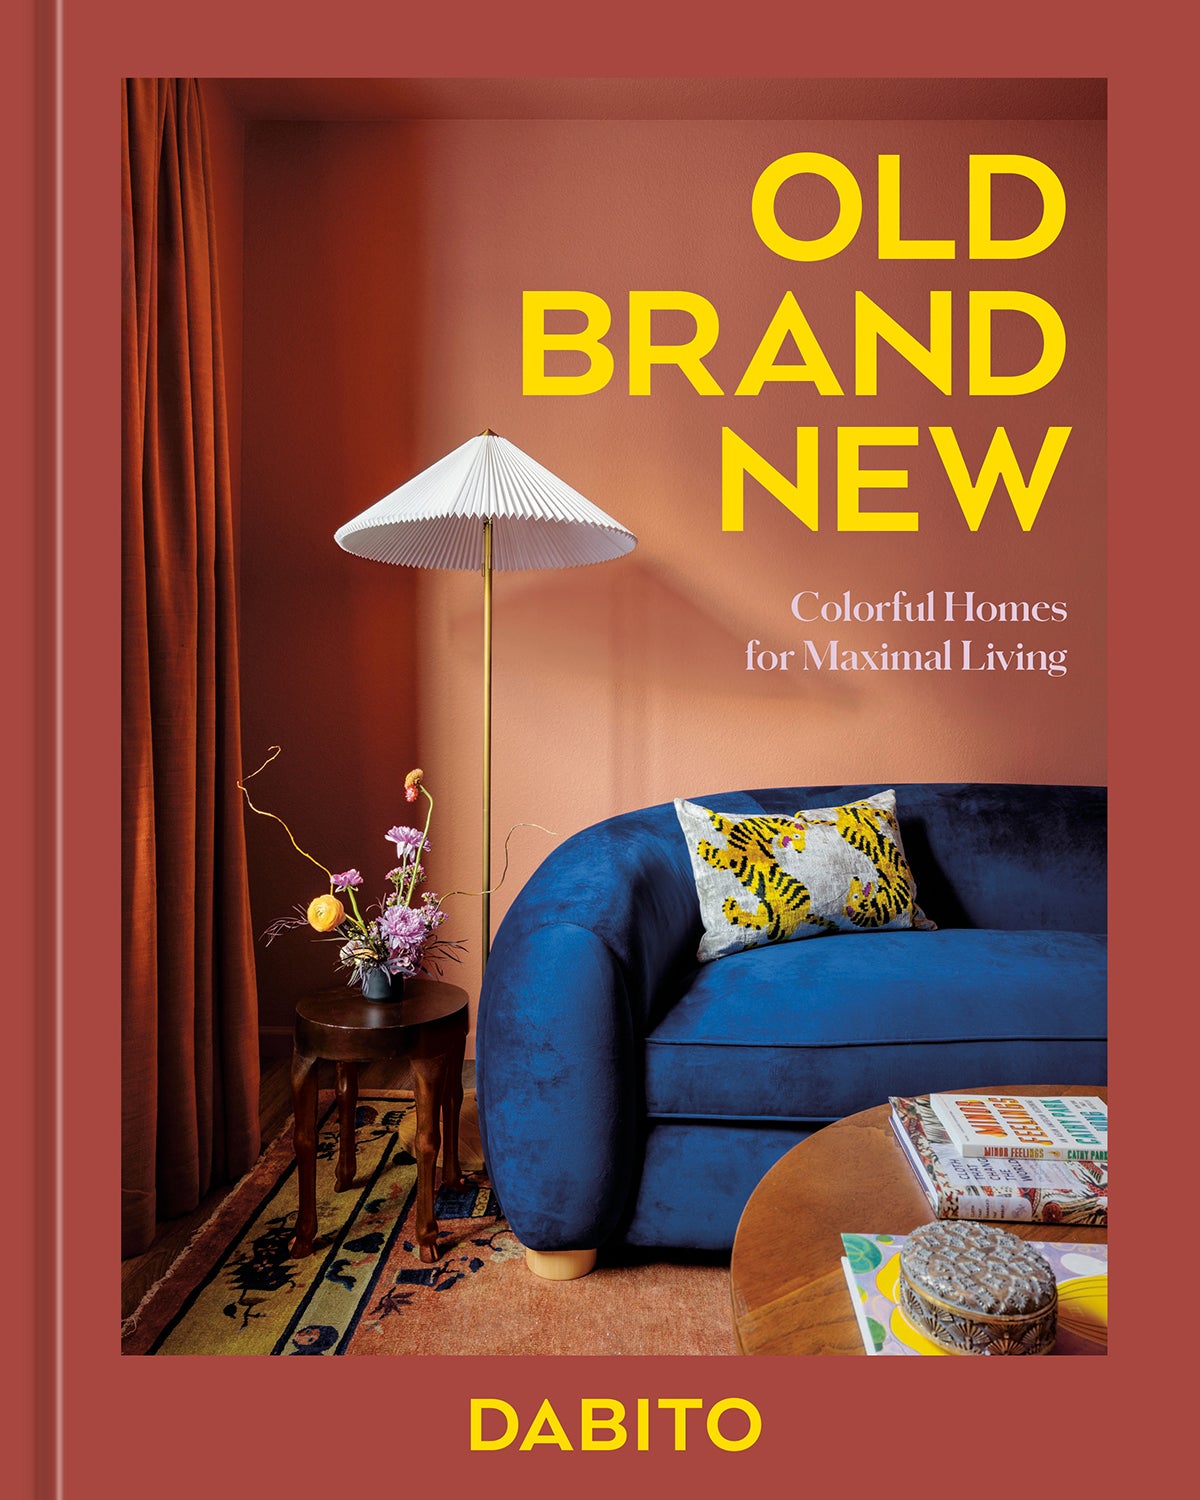 Cover of Dabito's "Old Brand New" book